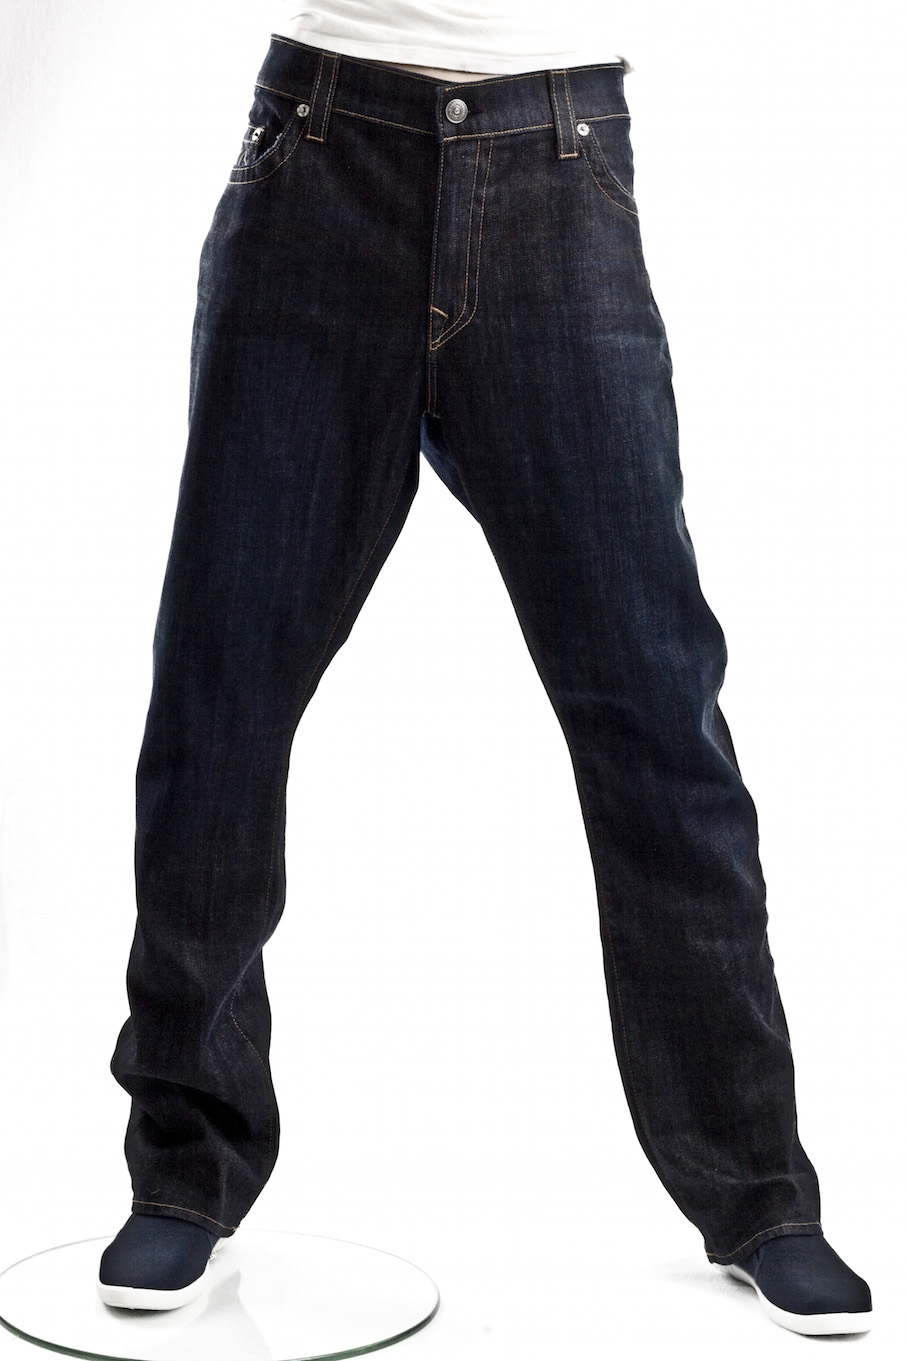 Мужские джинсы True Religion широкие прямые Ricky straight leg no flaps jean